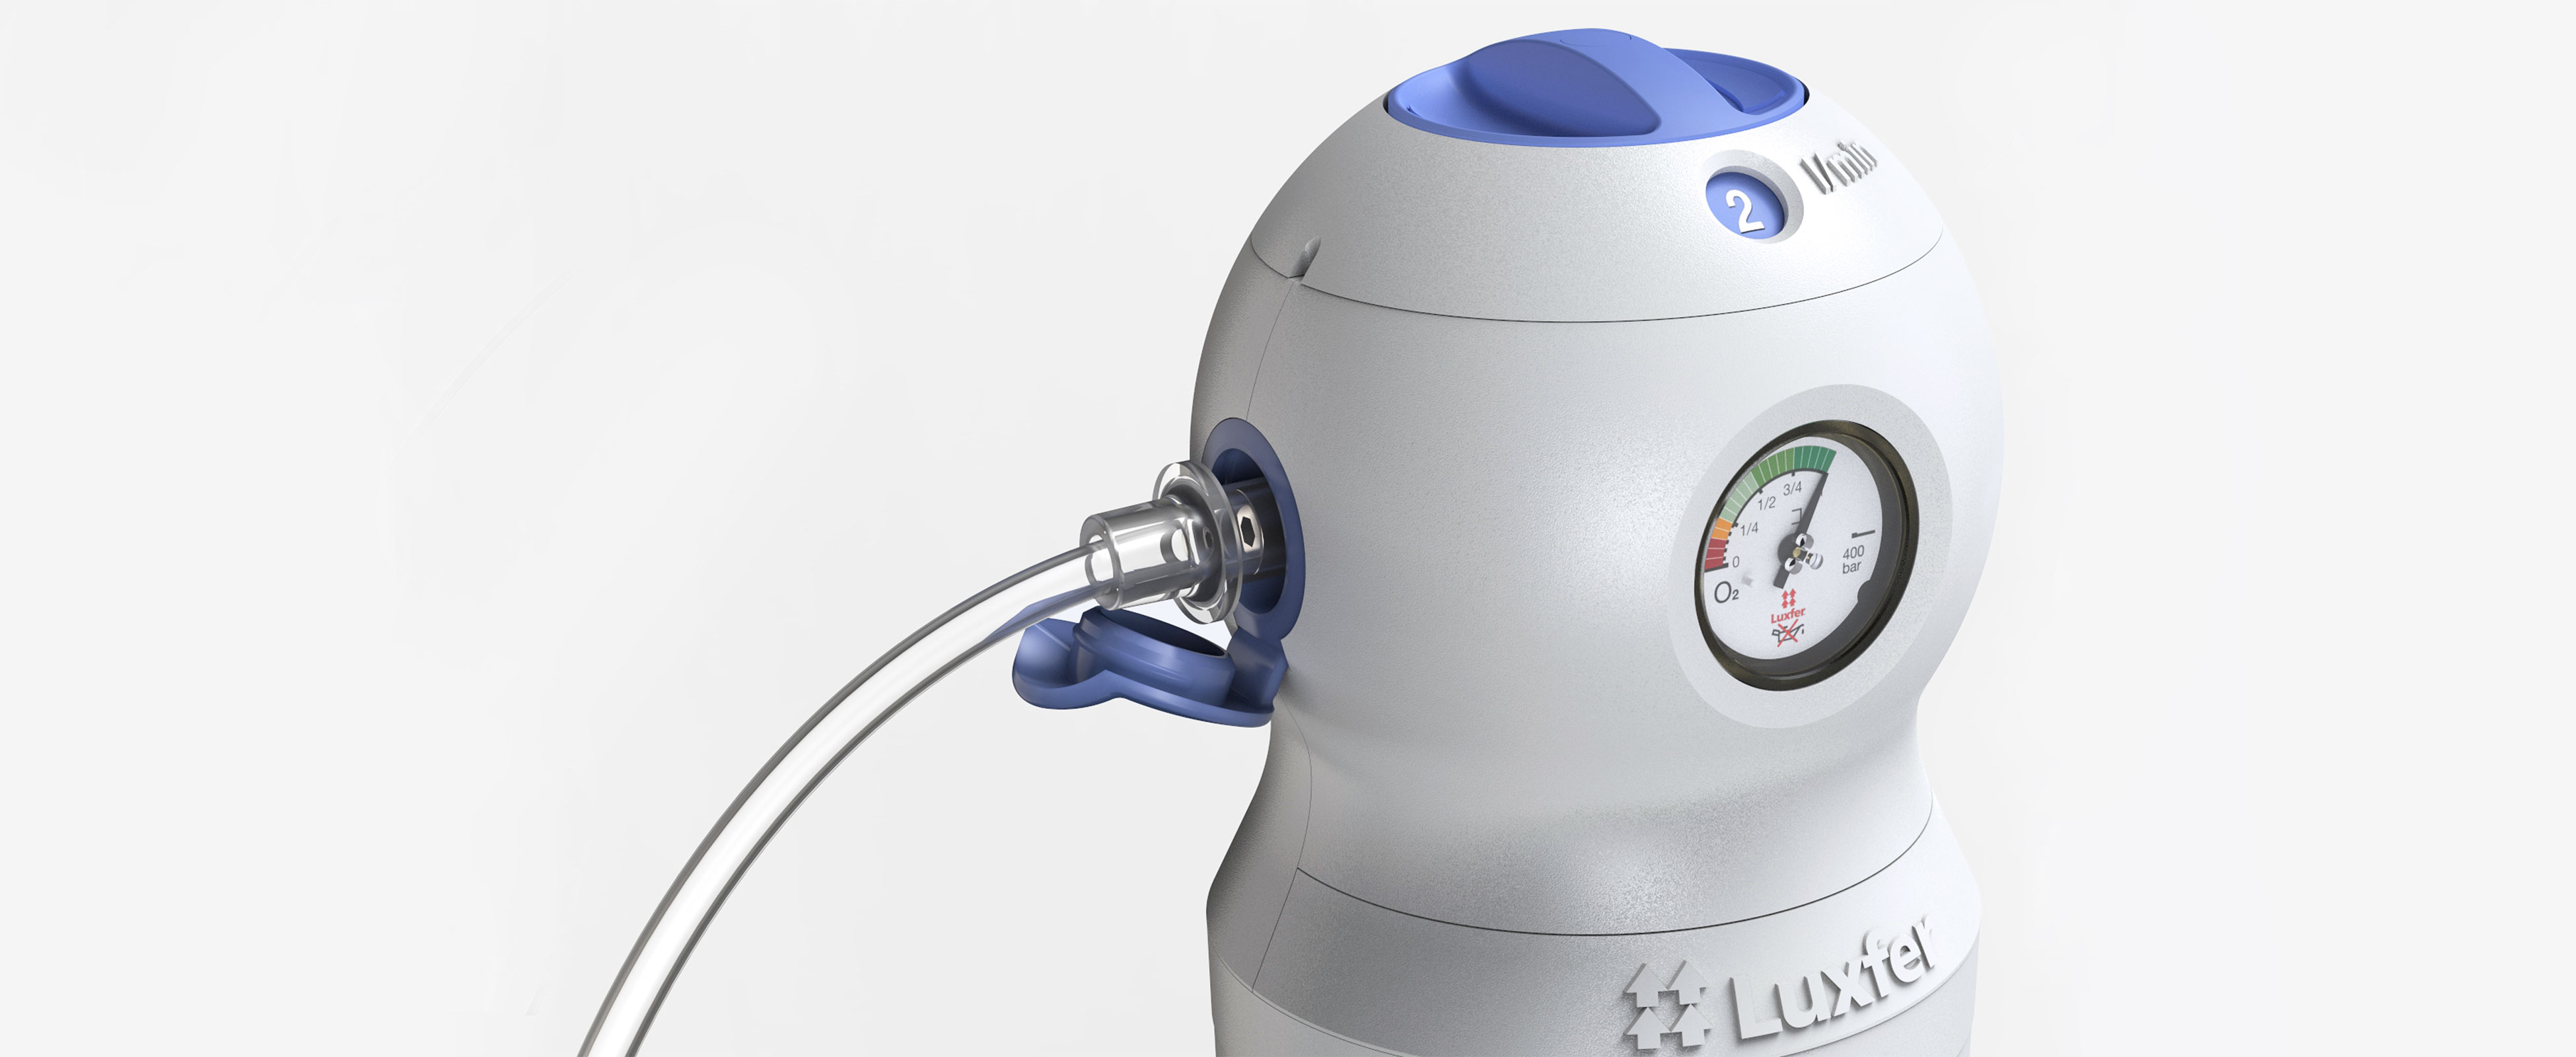 A 1-litre analogue medical oxygen system